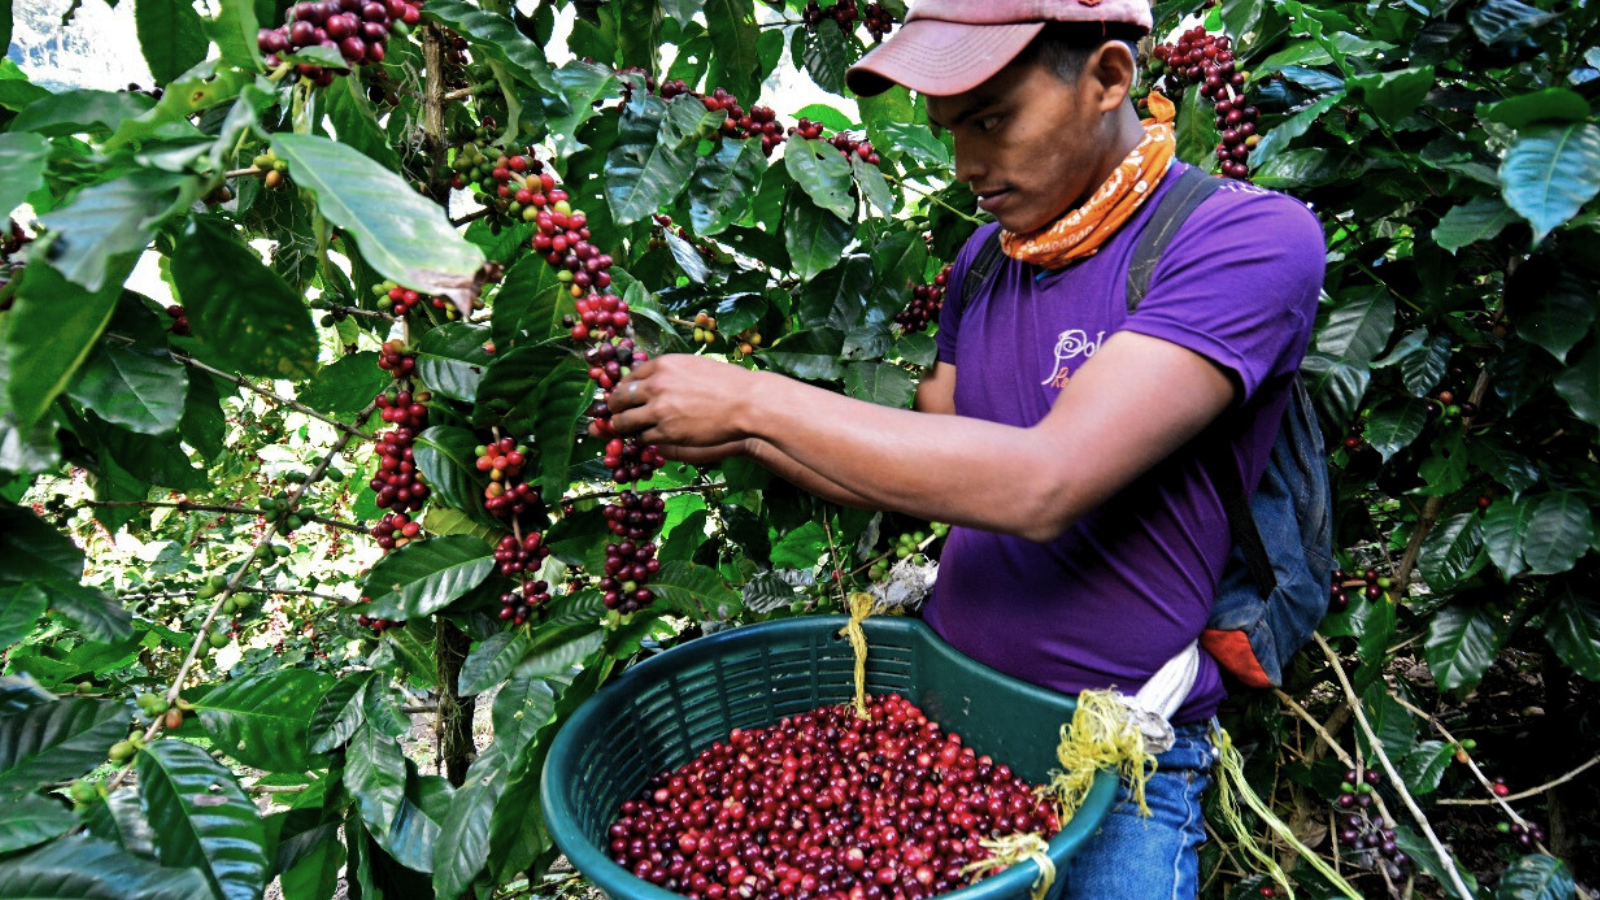 Nicaraguan coffee picker selecting ripe red coffee cherries during harvest